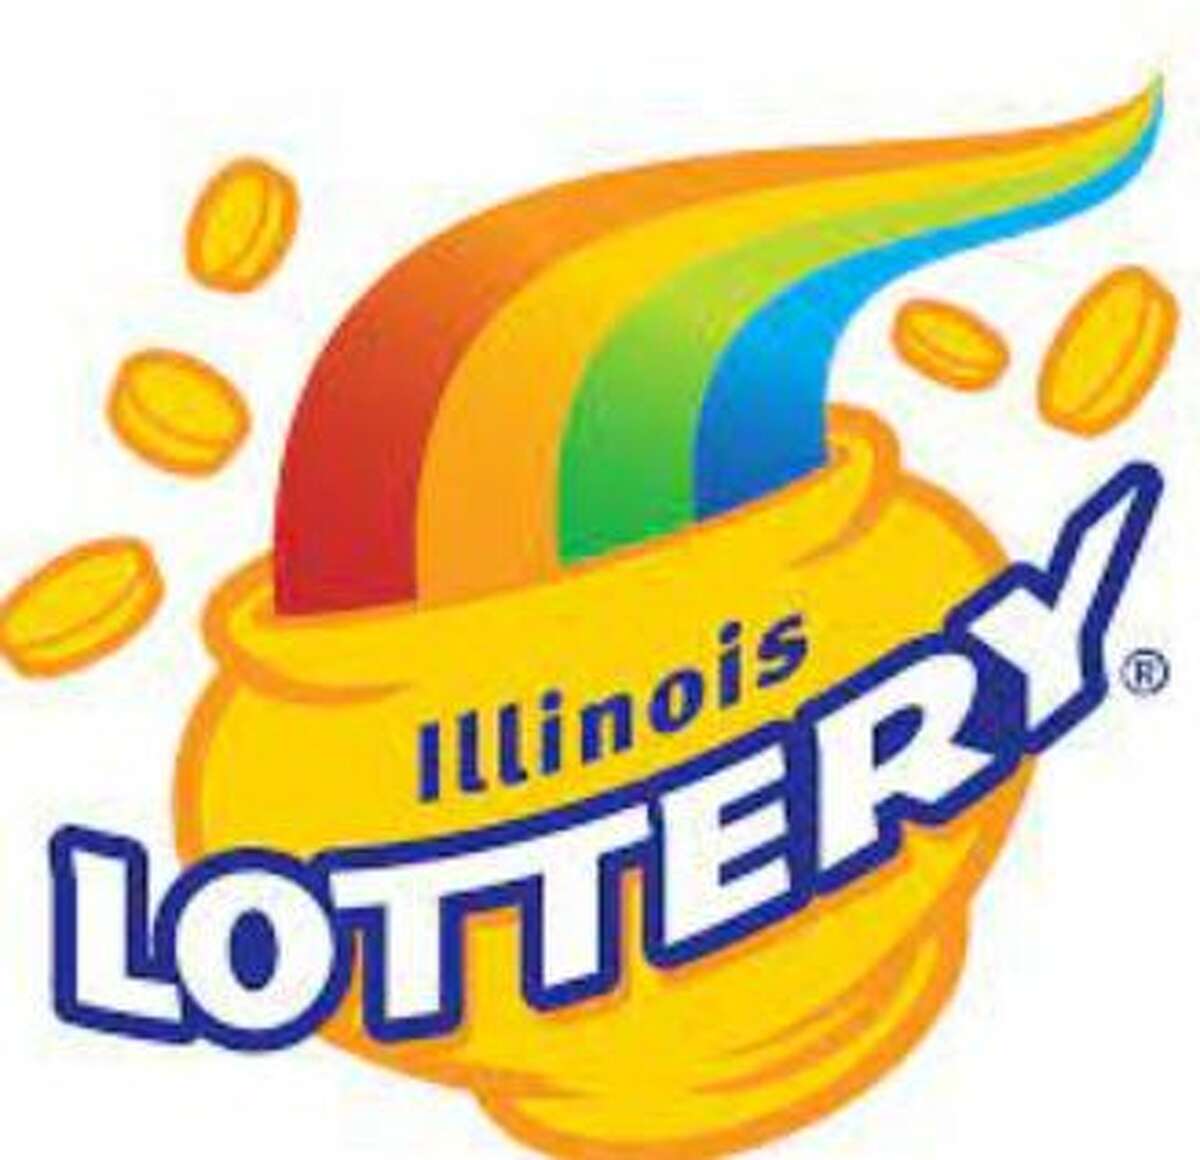 A $1 million winning Lotto ticket was sold in Alton on Thursday.